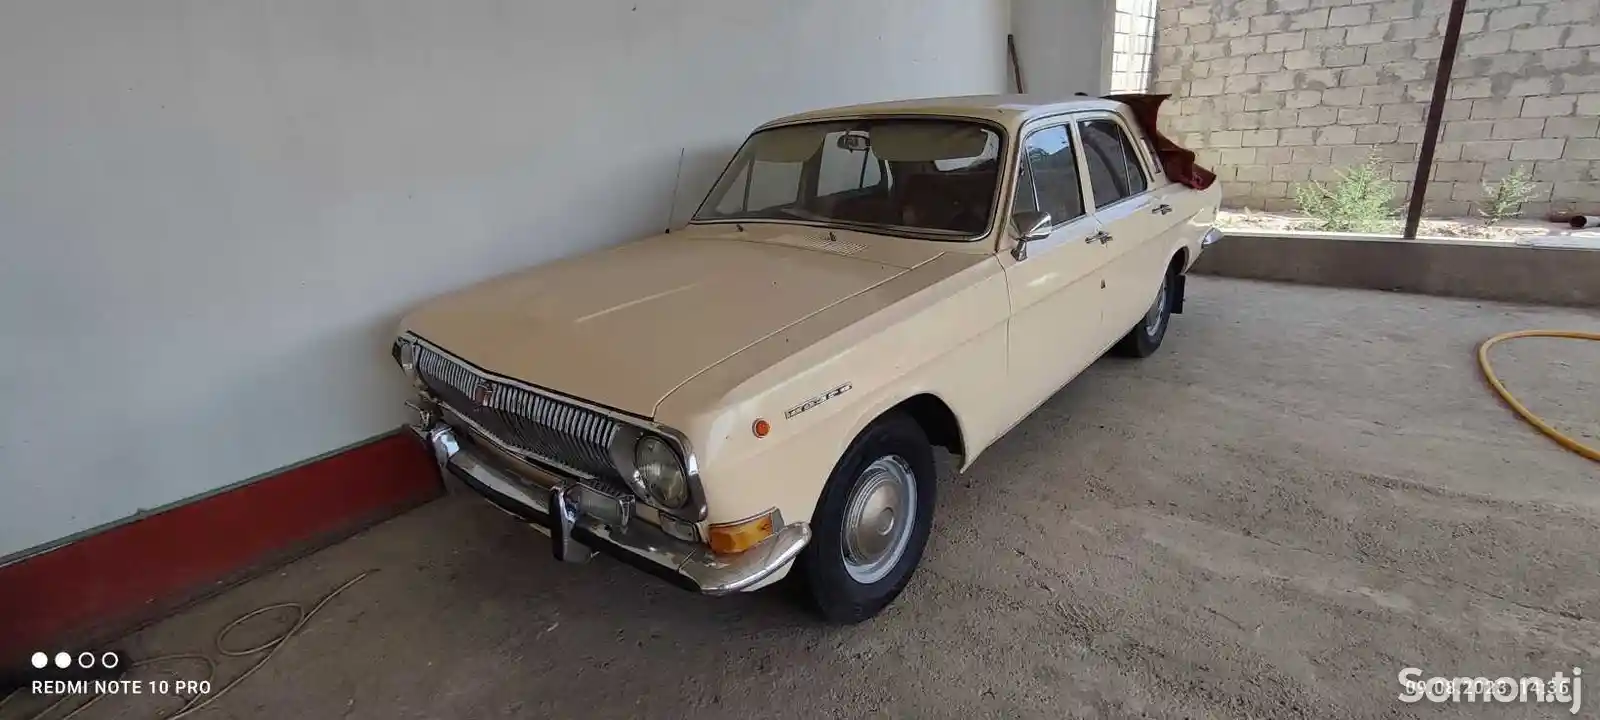 ГАЗ 24, 1980-1